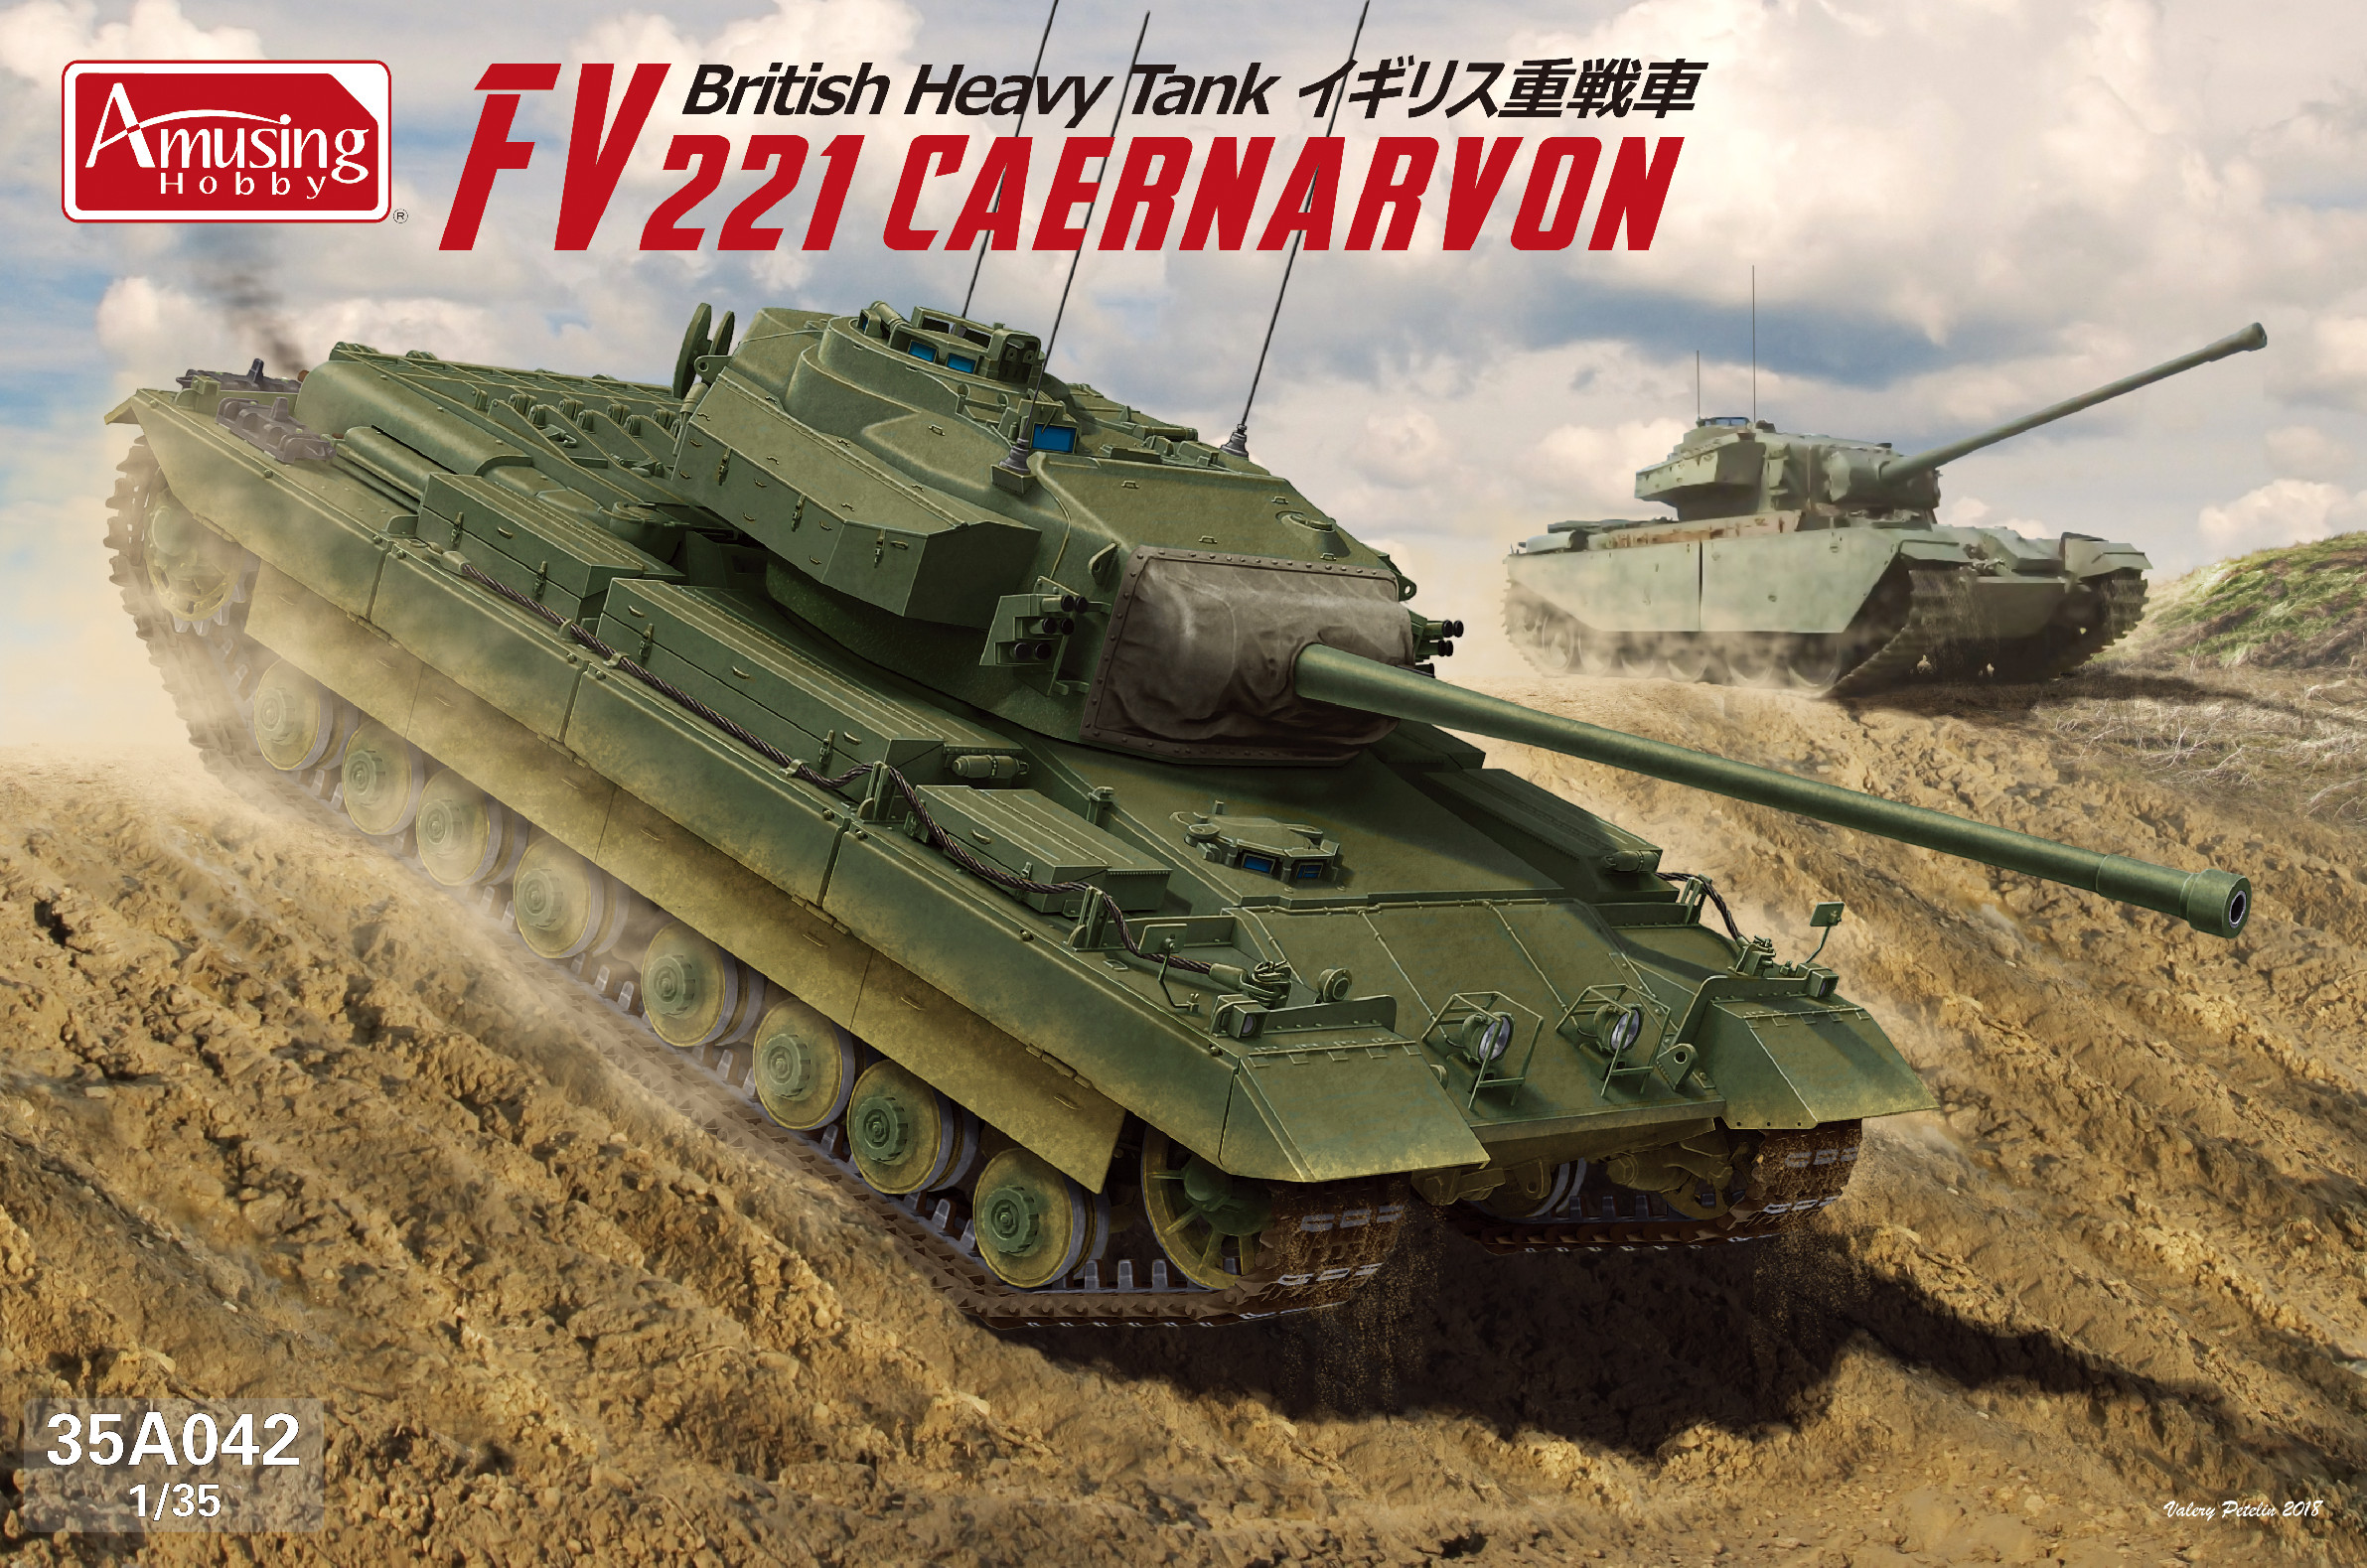 1/35 British heavy tank FV221 Caernarvon